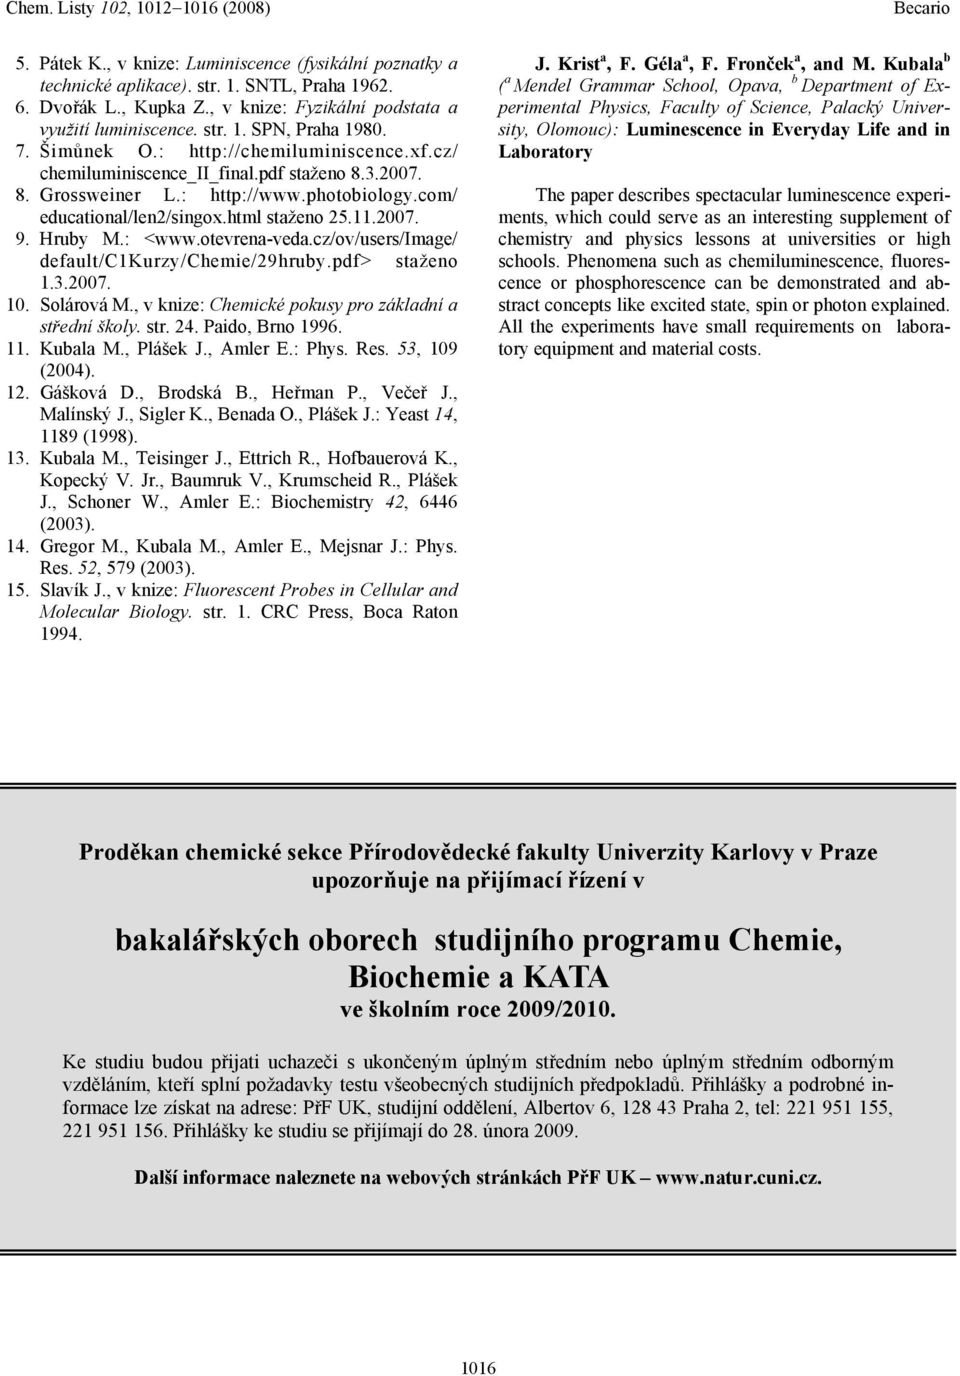 ruby M.: <www.otevrena-veda.cz/ov/users/image/ default/c1kurzy/chemie/29hruby.pdf> staženo 1.3.2007. 10. Solárová M., v knize: Chemické pokusy pro základní a střední školy. str. 24. Paido, Brno 1996.